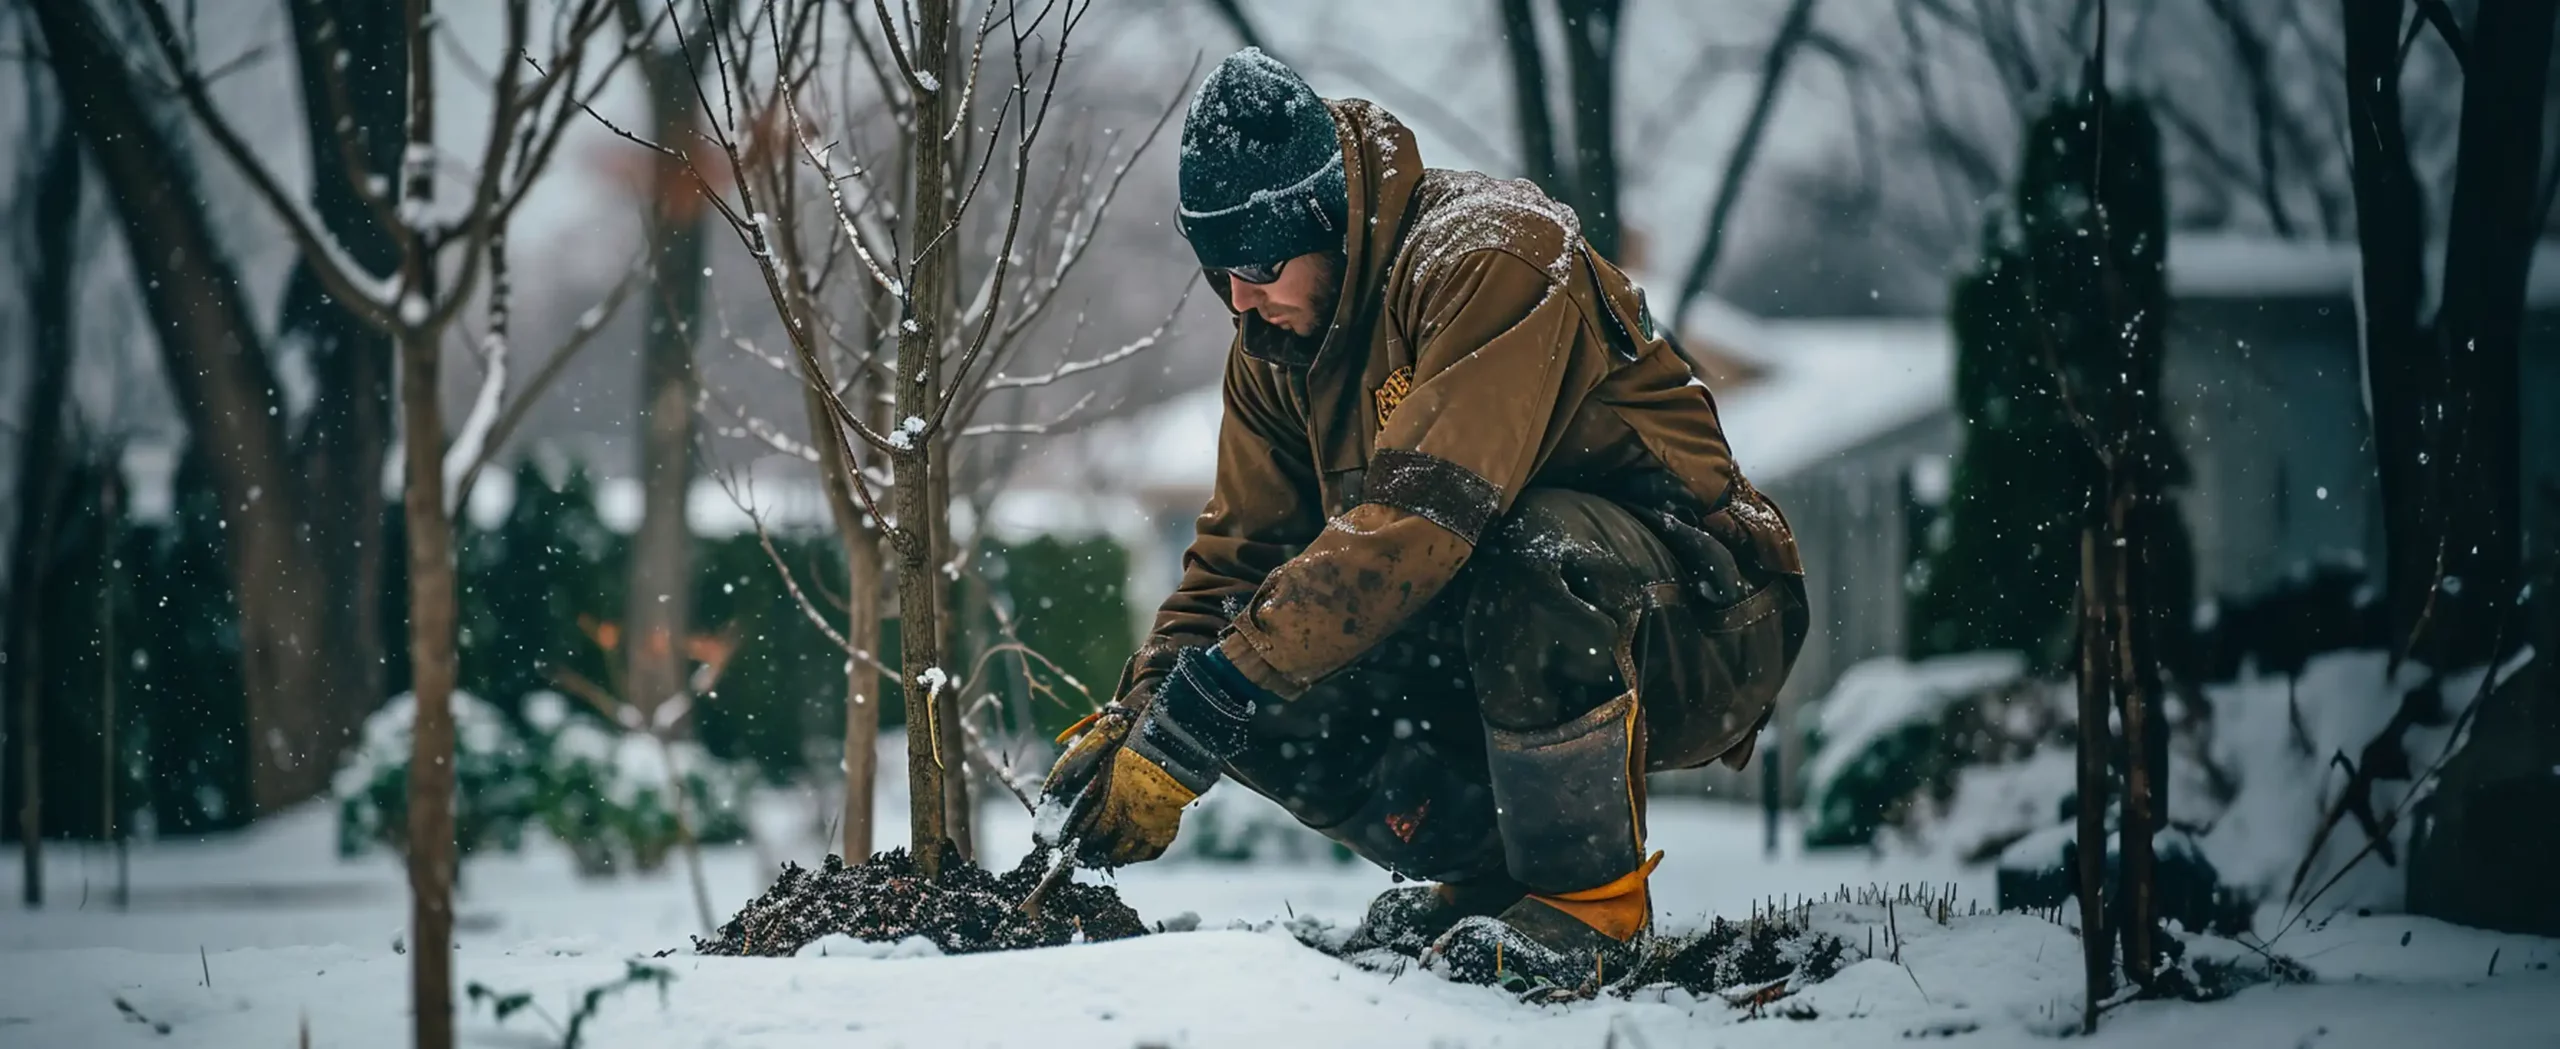 Landscaper planting trees in snowy winter yard